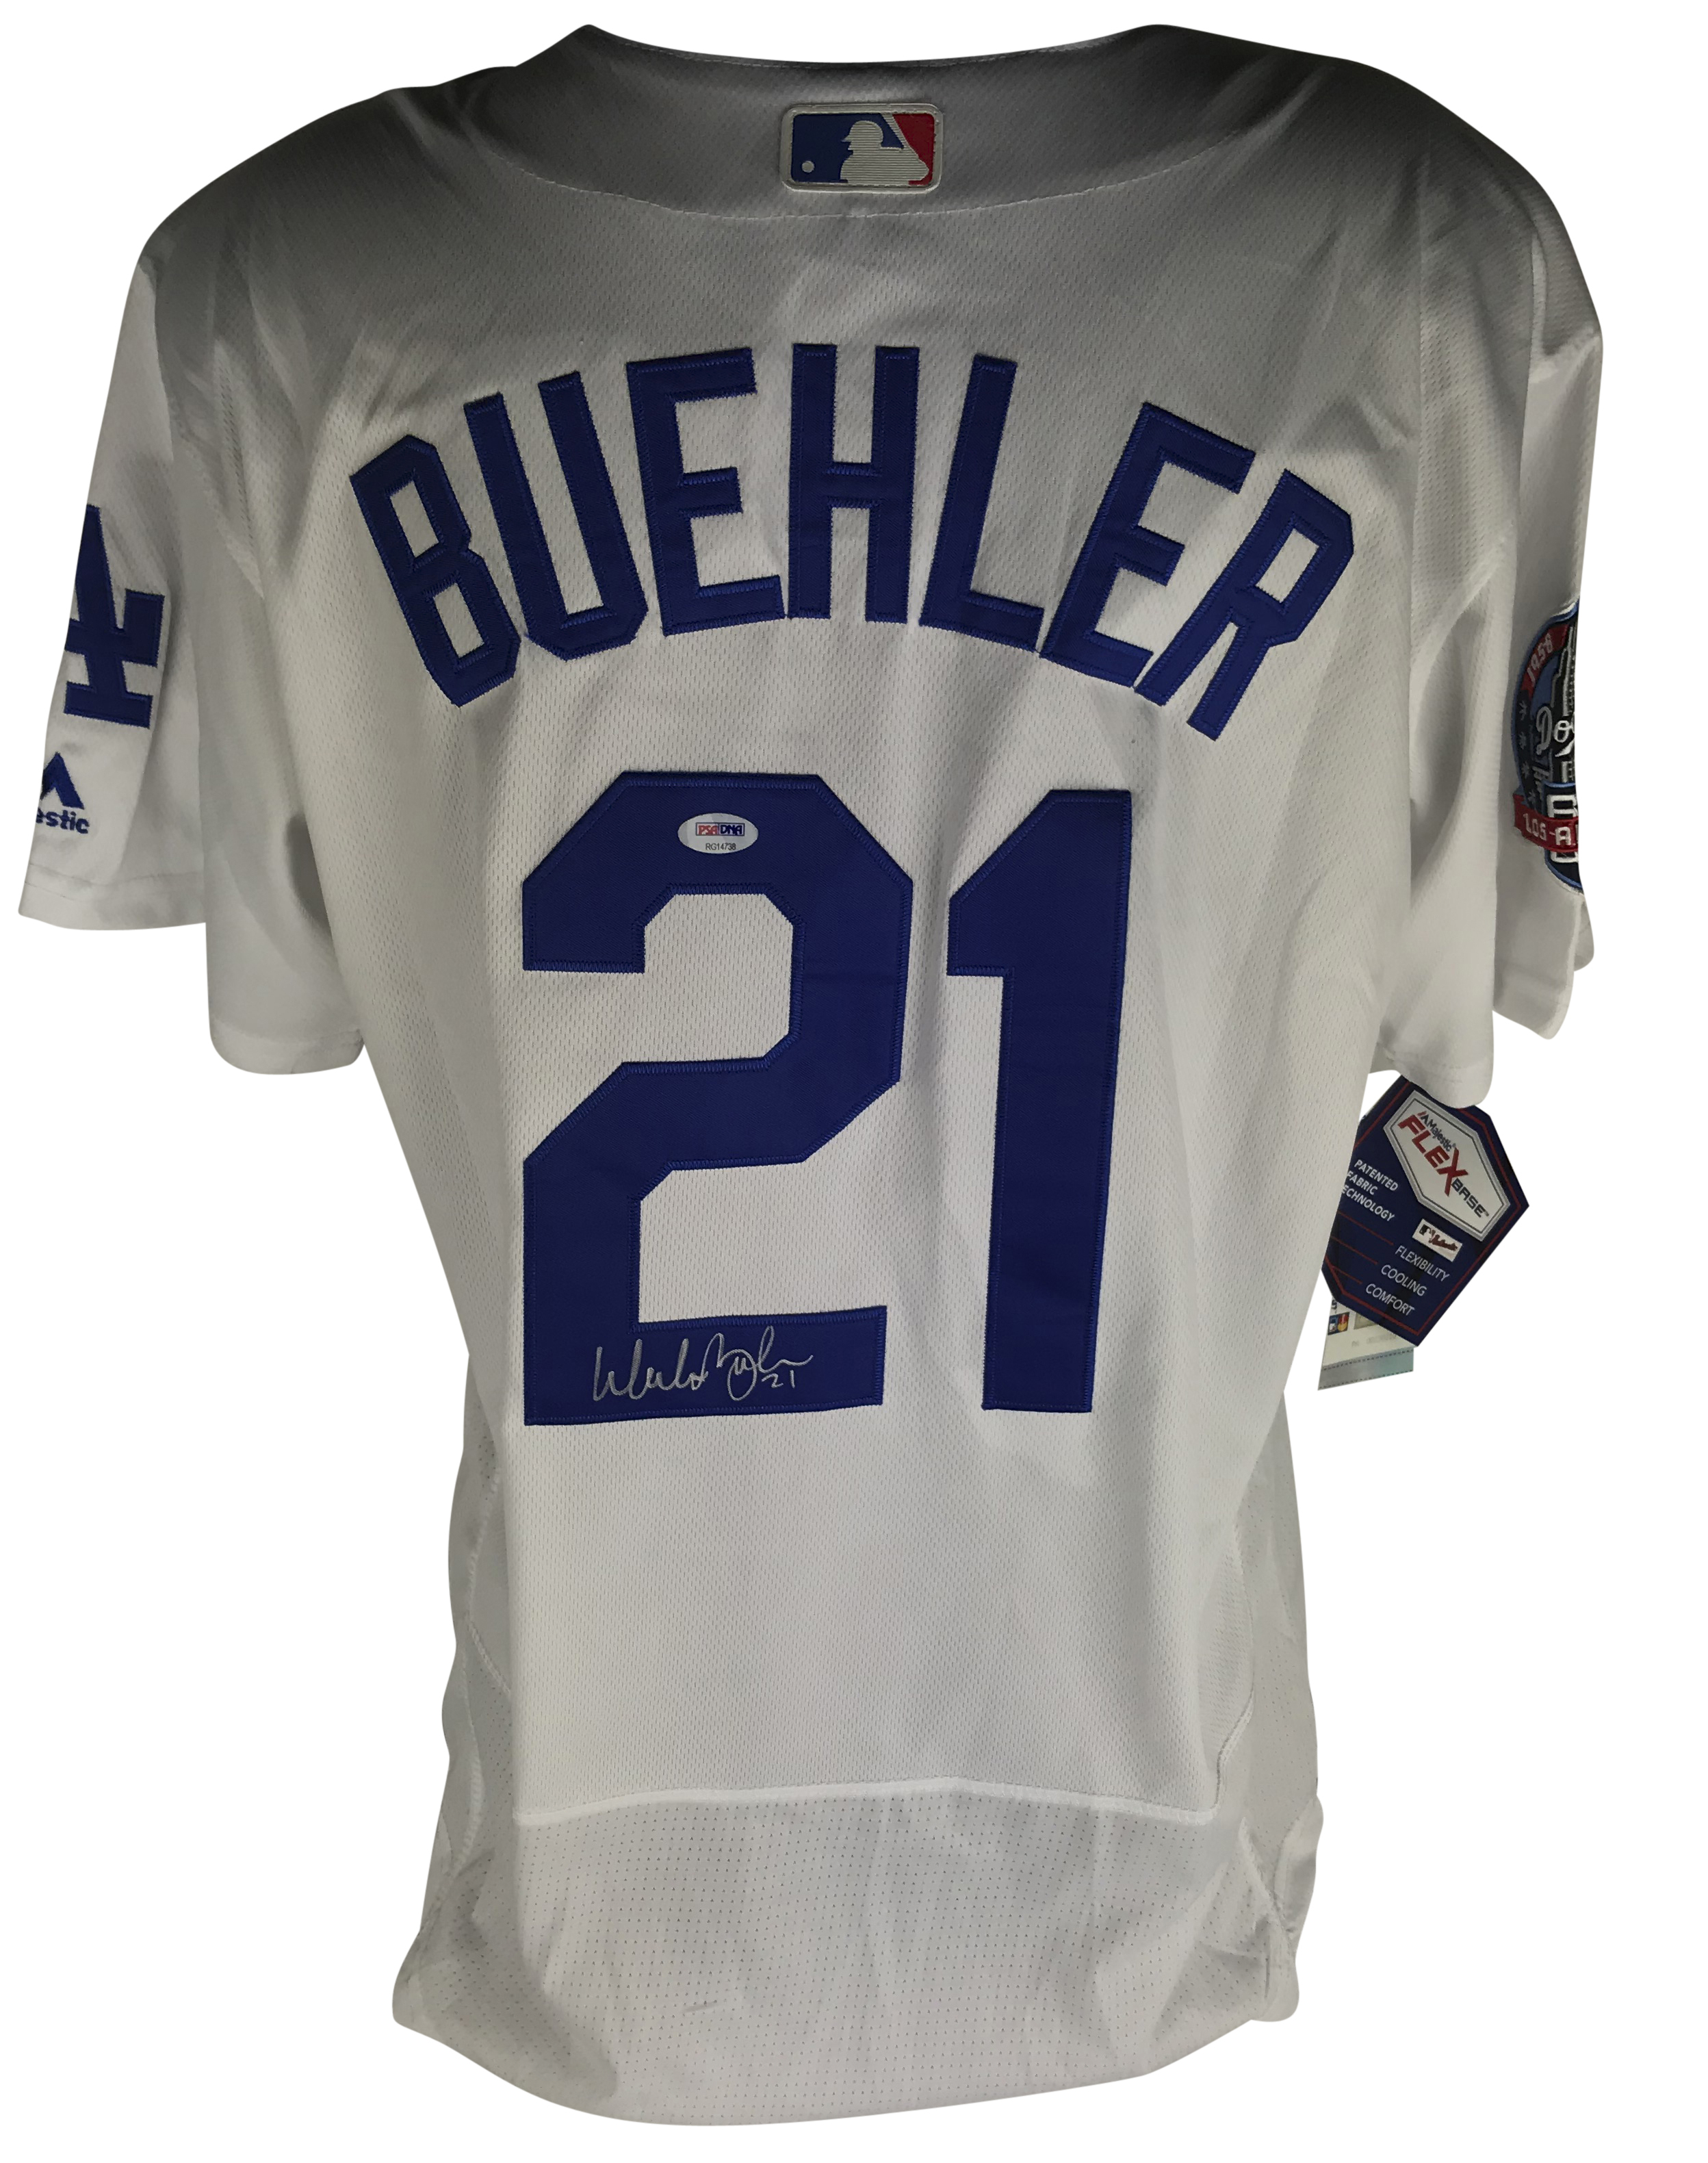 buehler autographed jersey